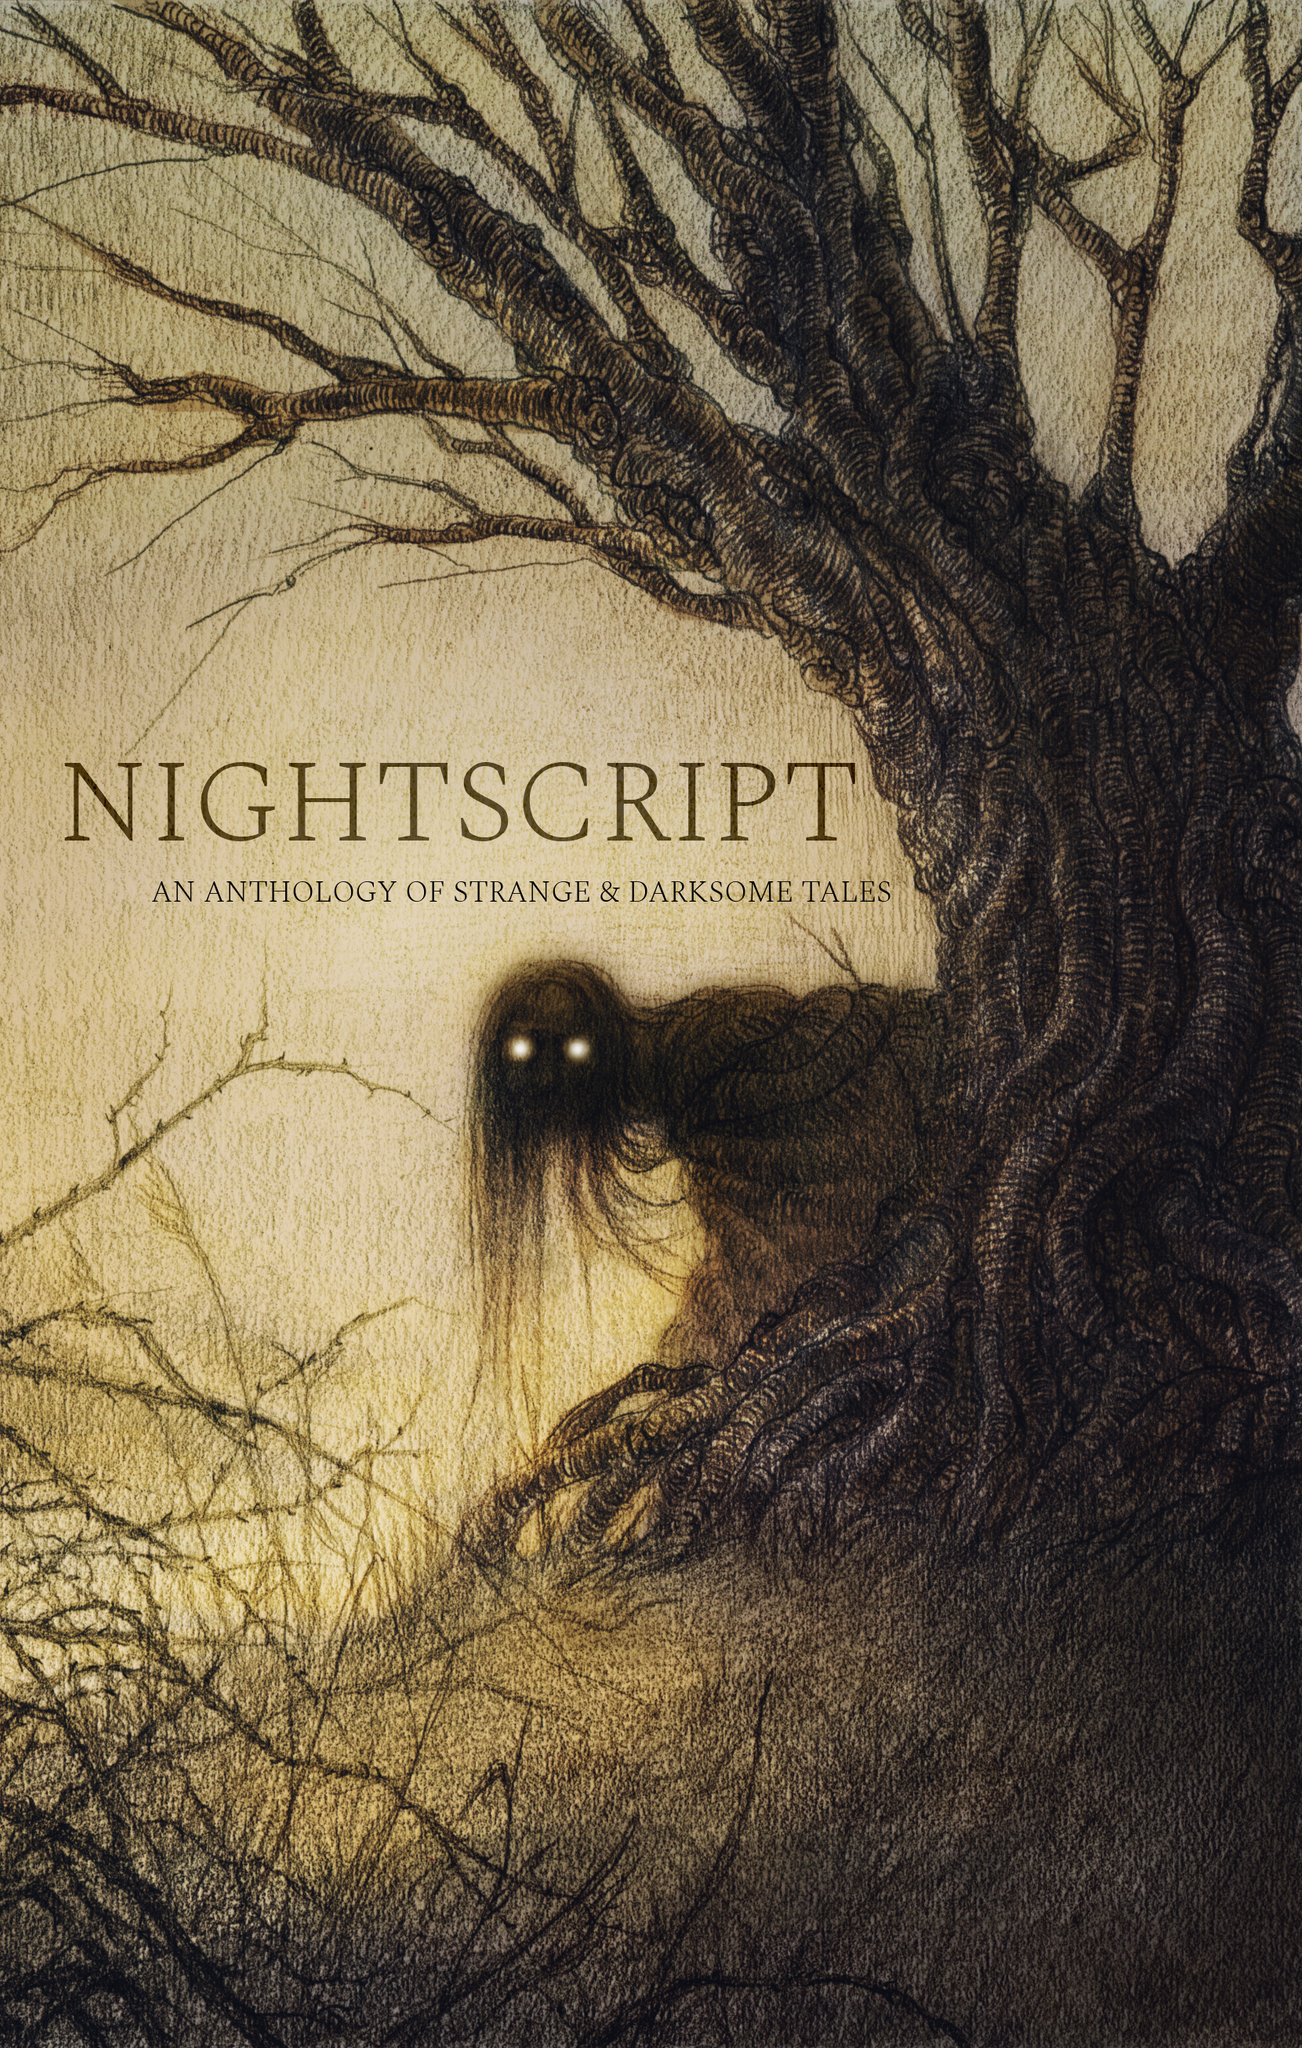 Nightscript 7: An Anthology of Strange & Darksome Tales ed by C.M. Muller